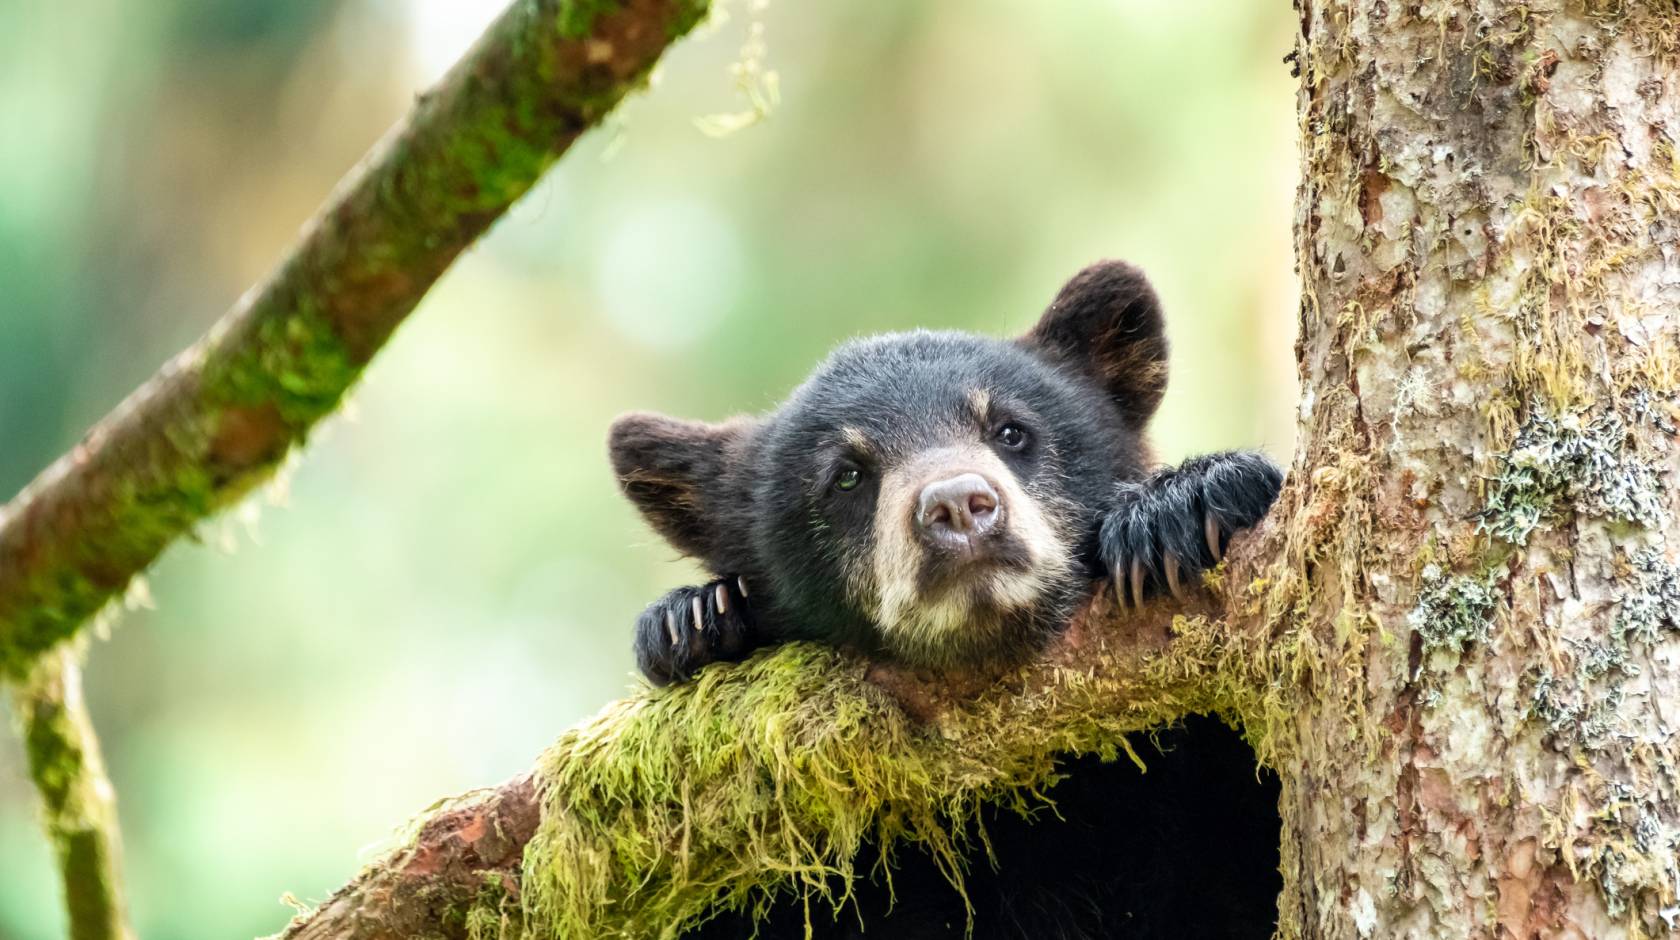 Black bear cub peering over tree branch